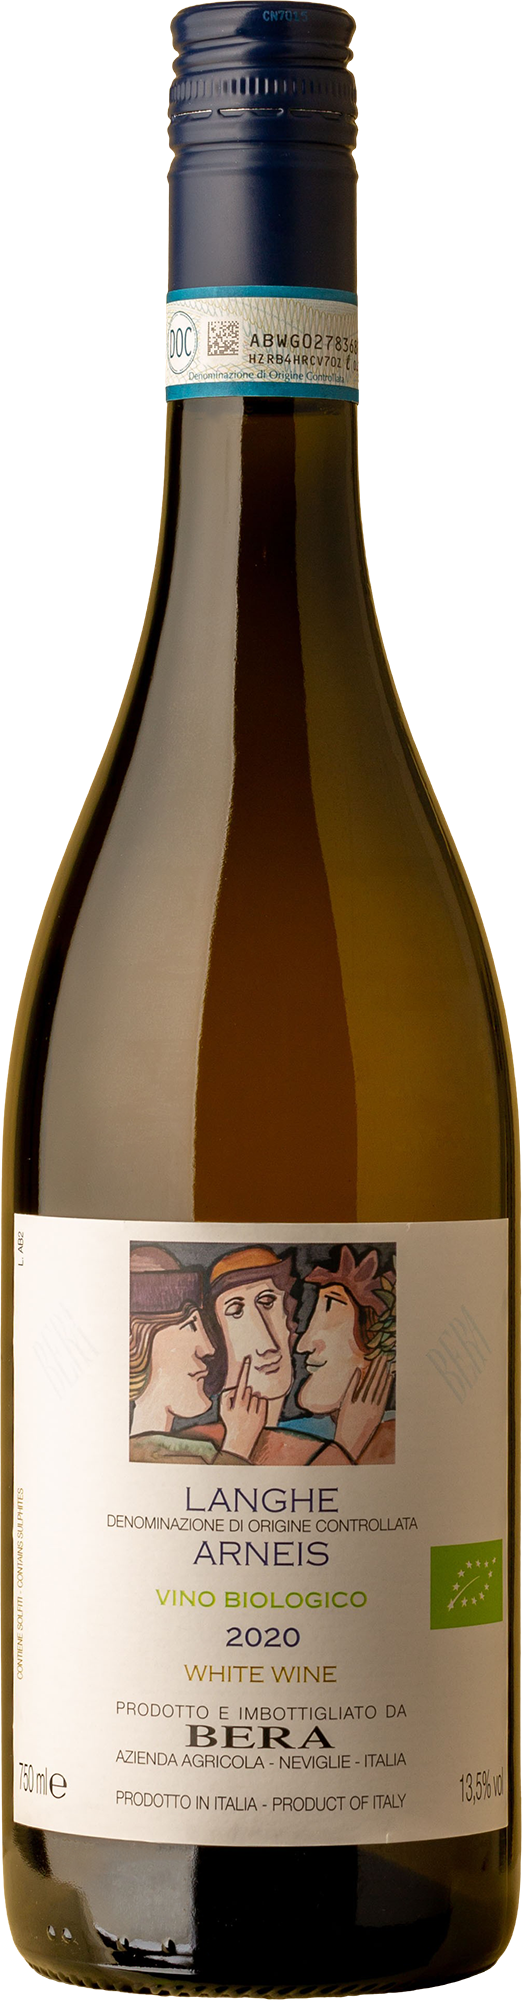 Bera - Langhe Arneis 2020 White Wine